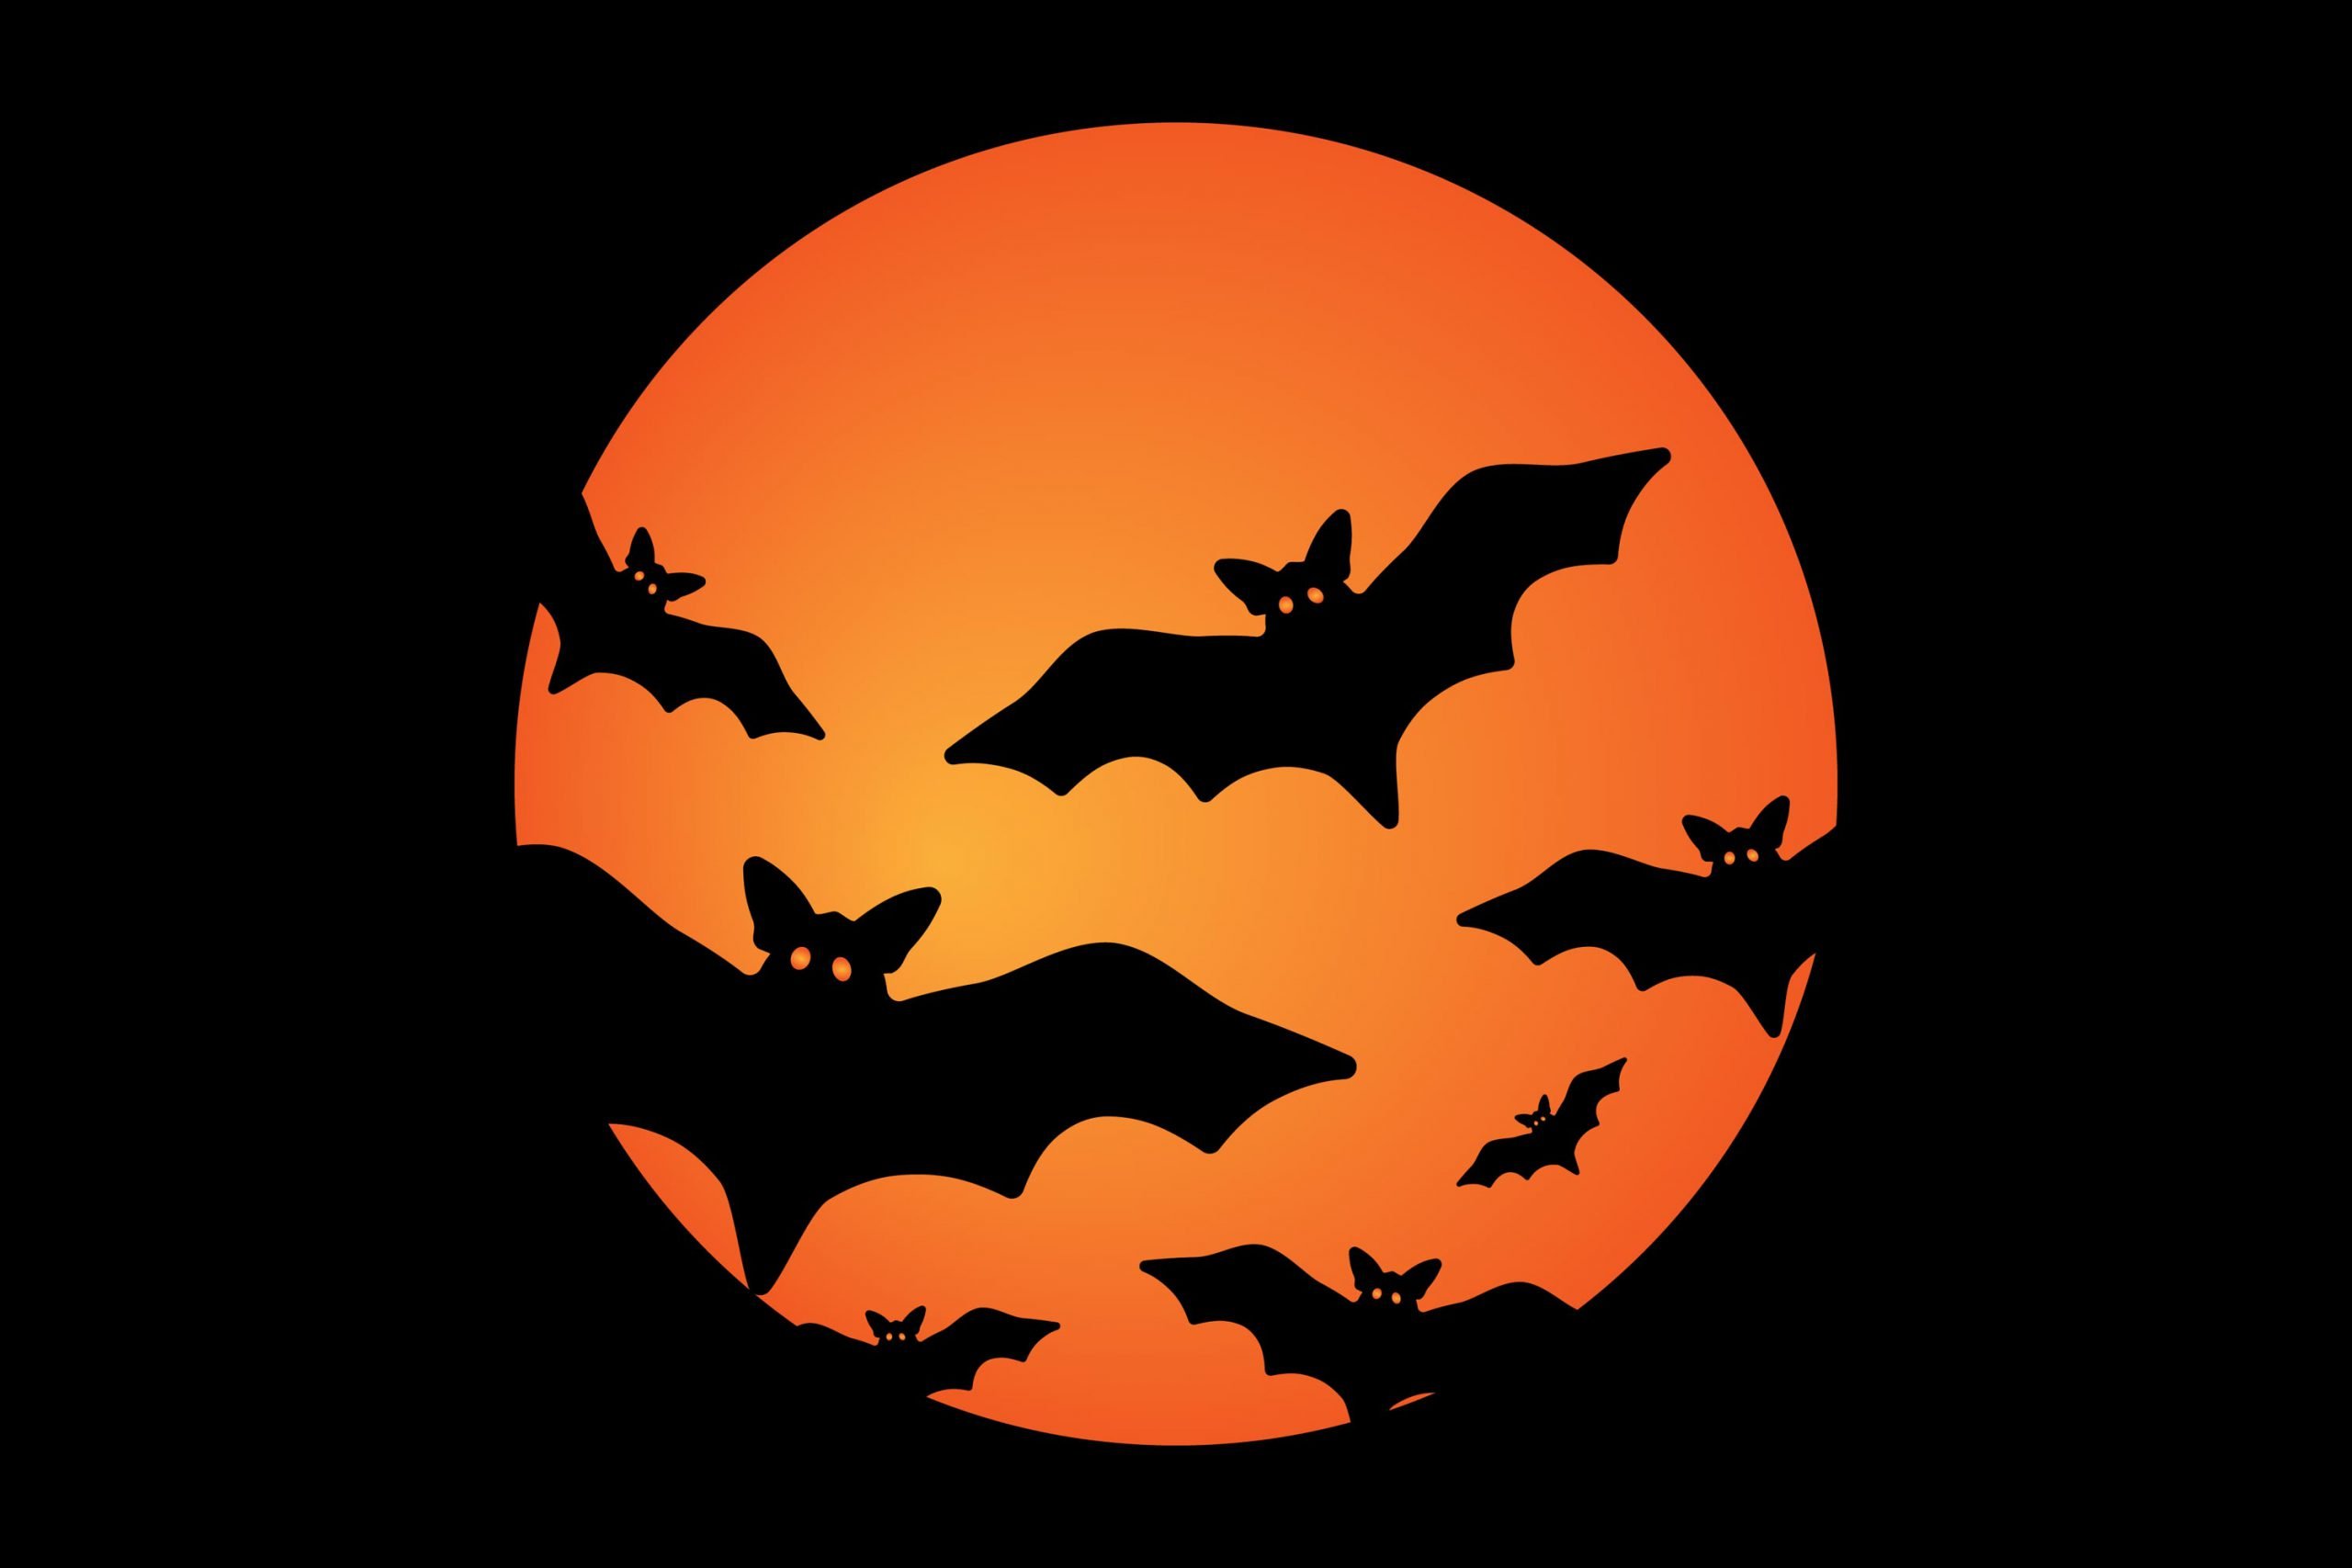 35+ Scary Halloween Wallpapers 2021 HD, Backgrounds, Pumpkin